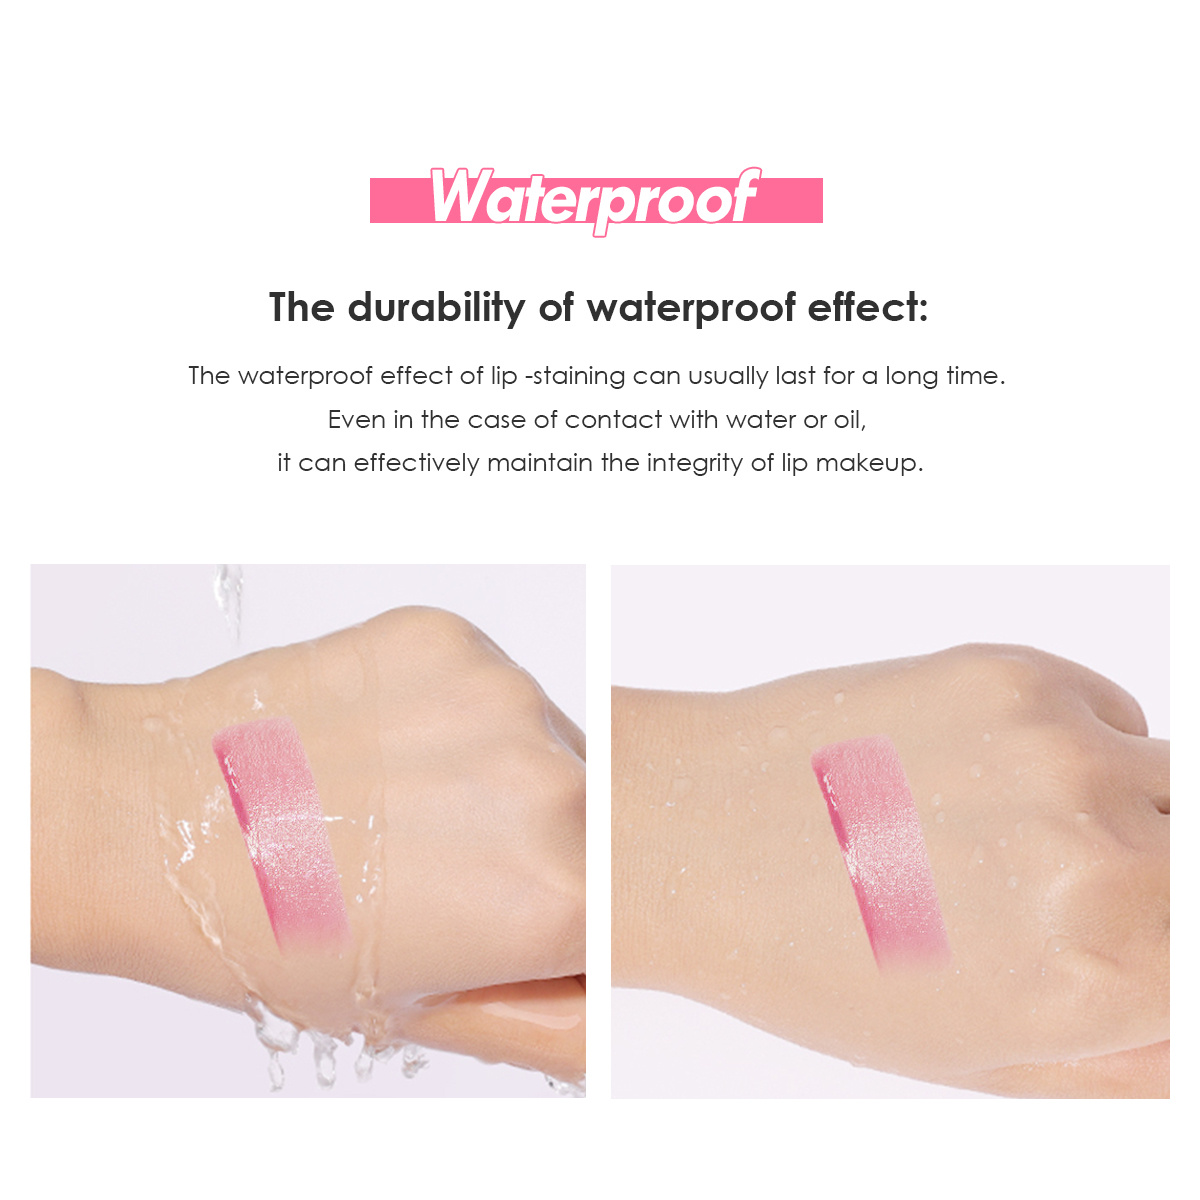 Lip Service / Tinted Strawberry Gloss – ad hoc penticton